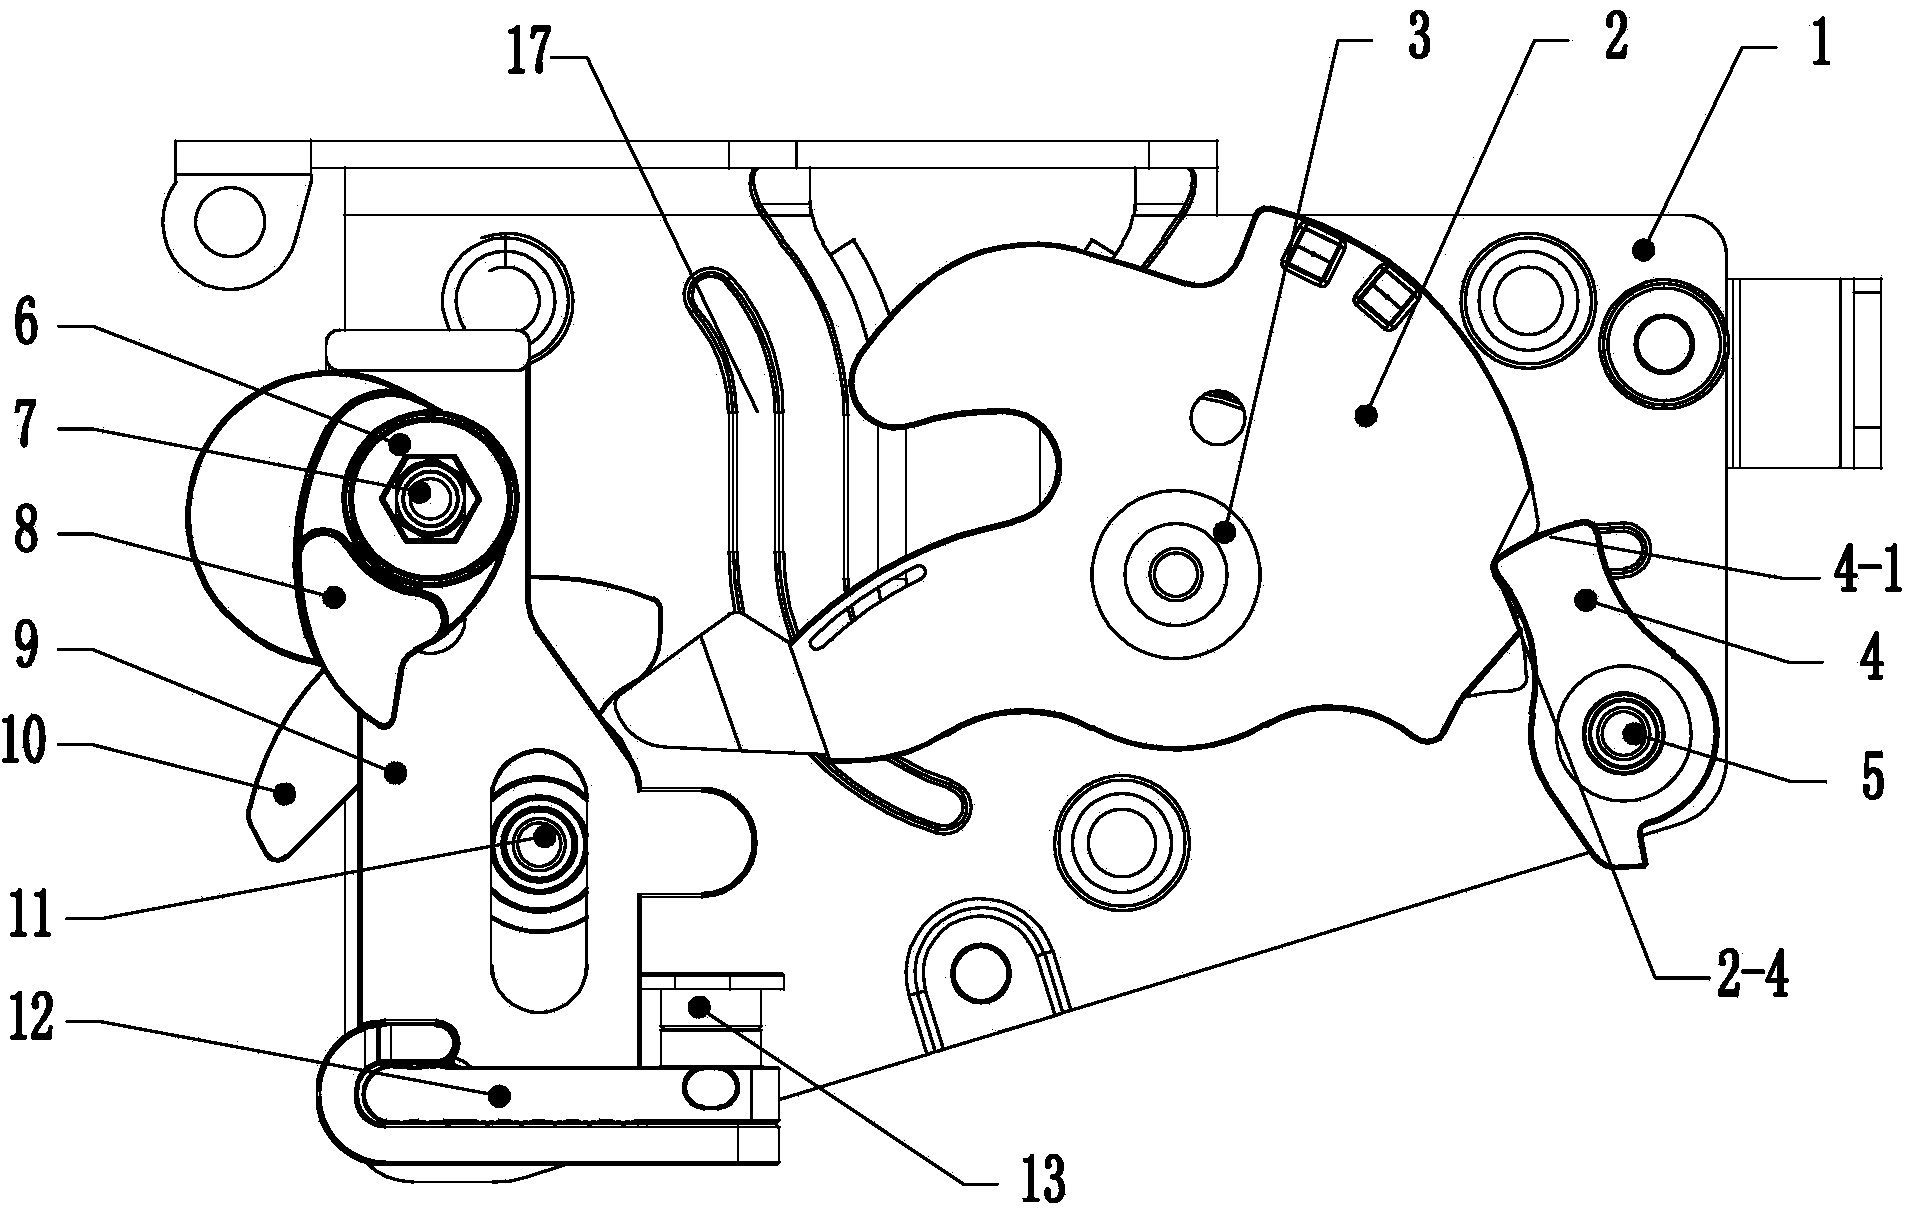 Side door lock transmission mechanism